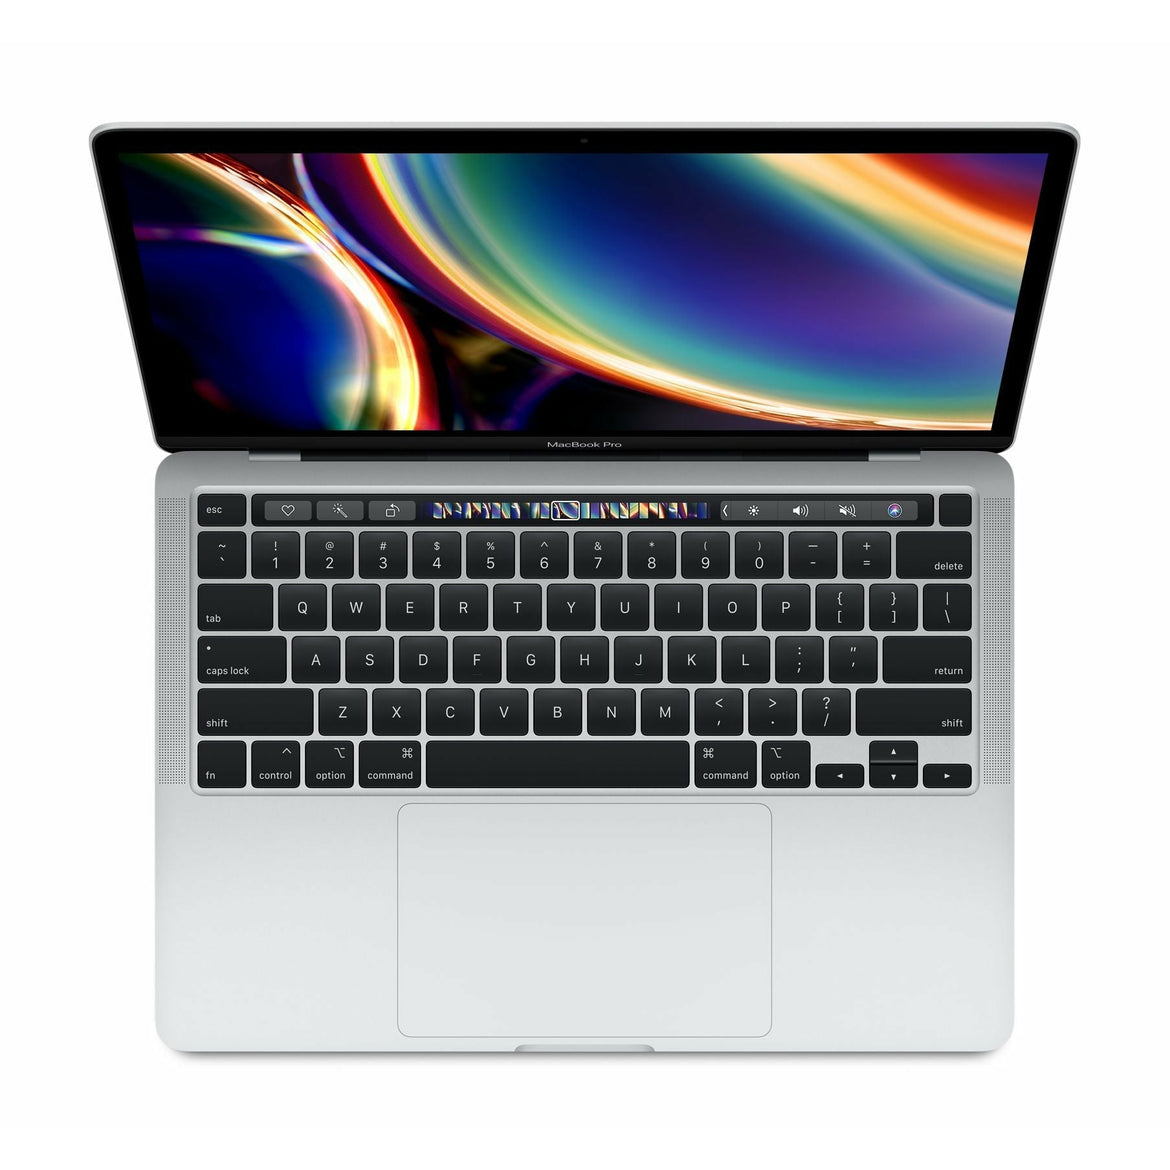 Apple MacBook Pro 13-inch Laptop 1.4GHz i5 Quad-Core 8GB RAM 256GB SSD (Silver)